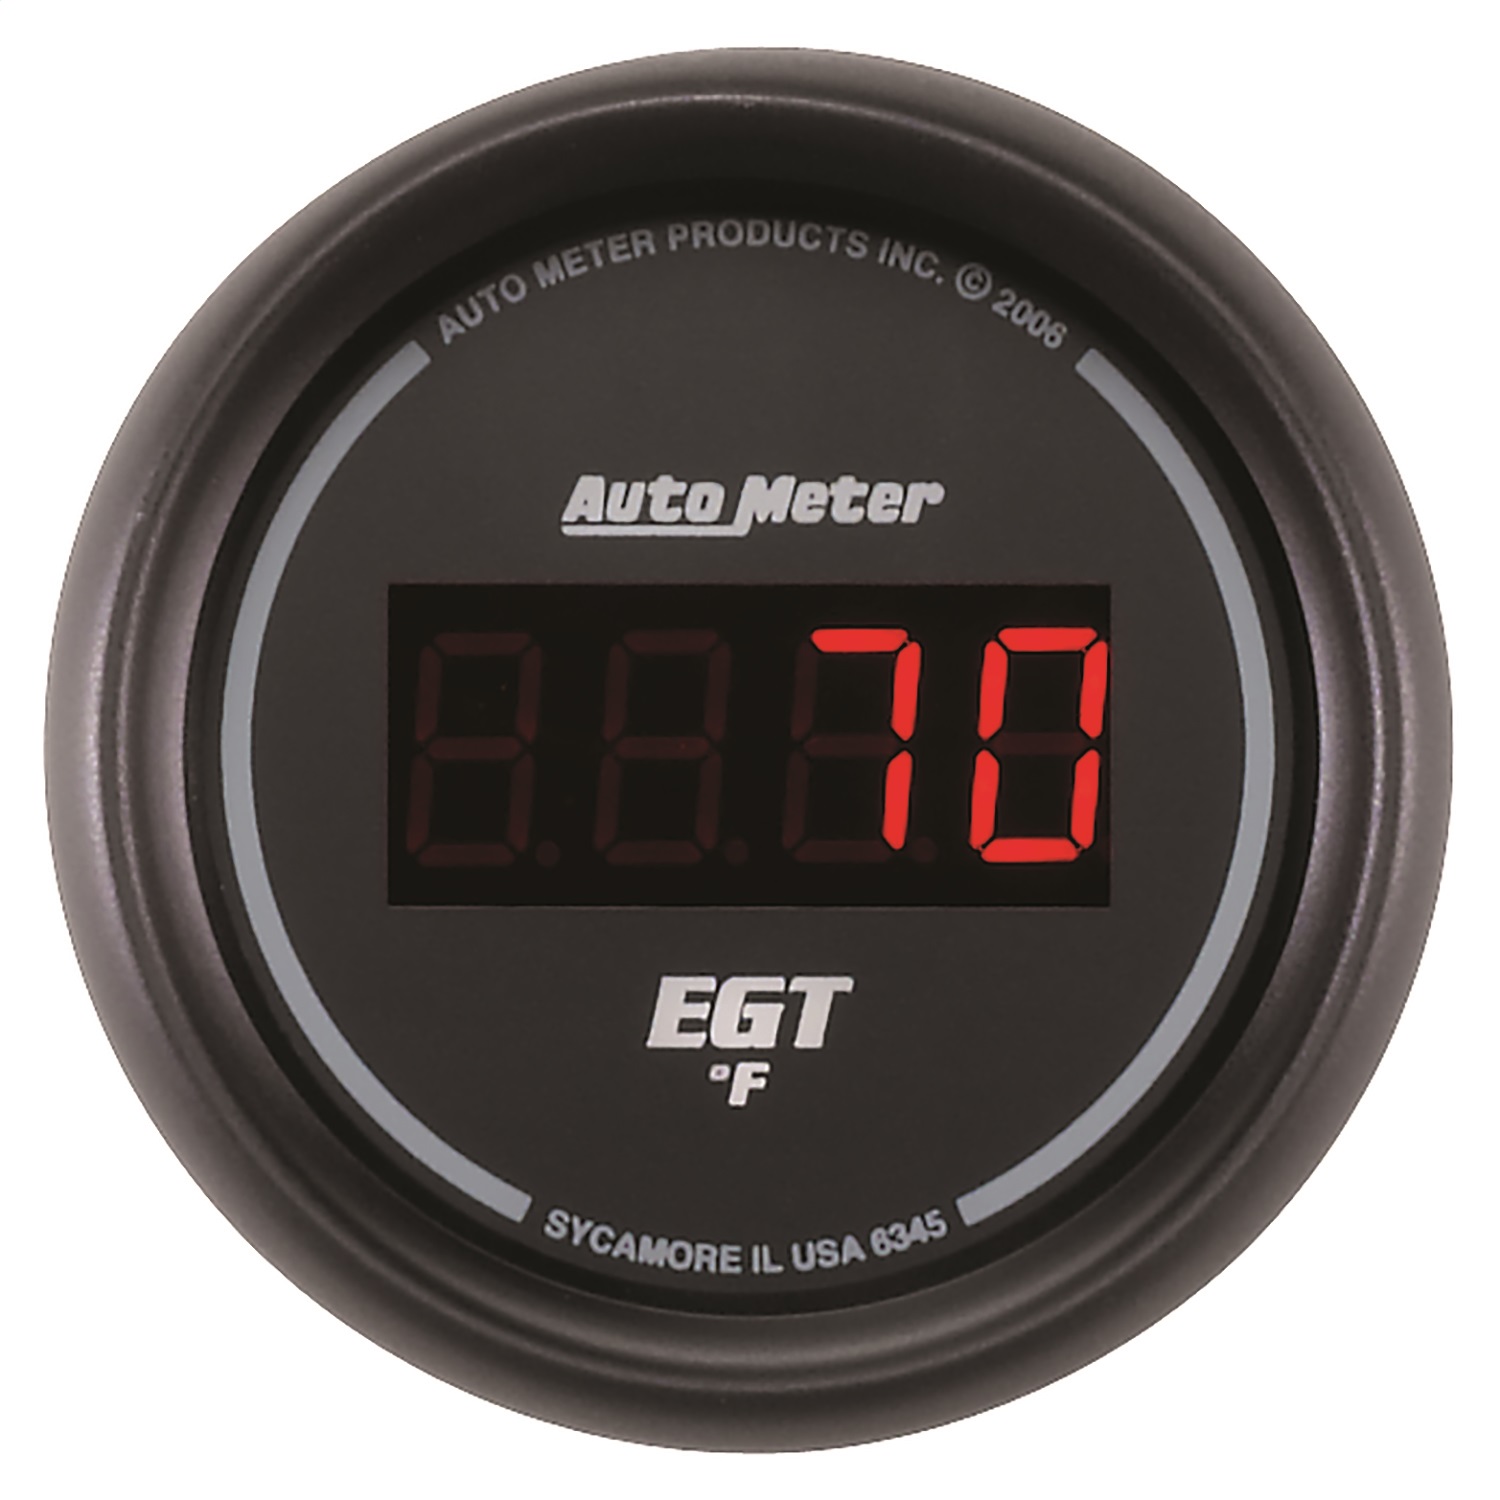 Auto Meter Auto Meter 6345 Sport-Comp; Digital Pyrometer Gauge